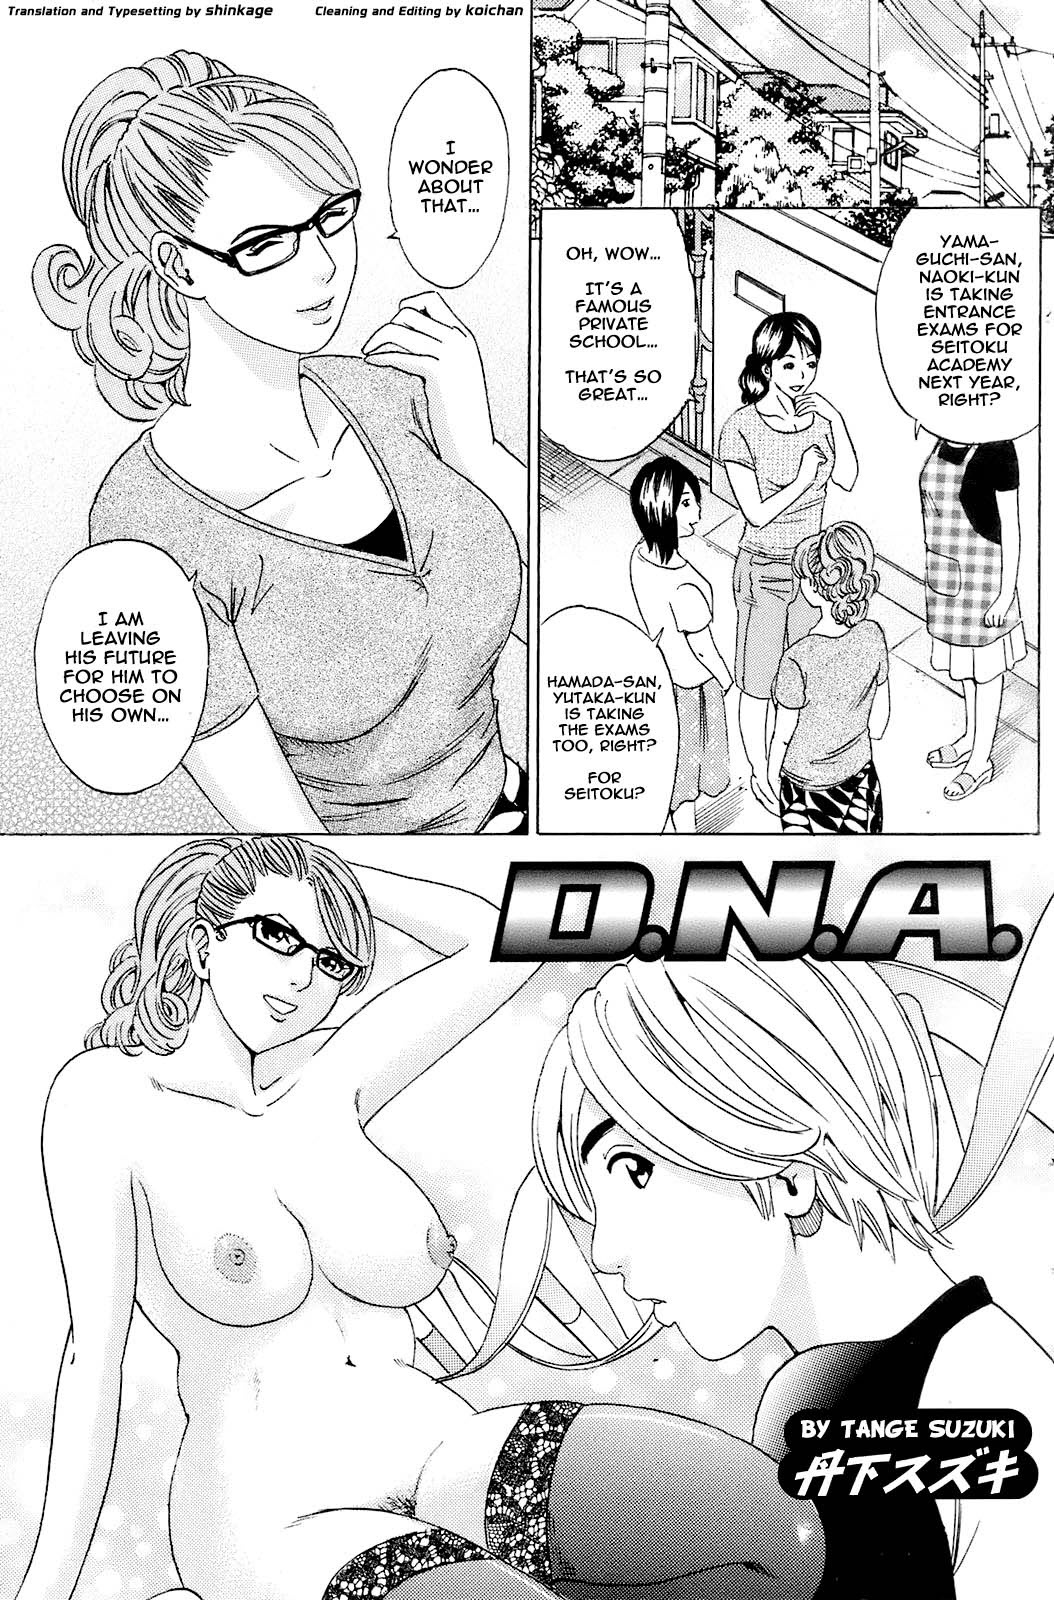 Tange Suzuki - D.N.A. by Tange Suzuki Hentai Comics